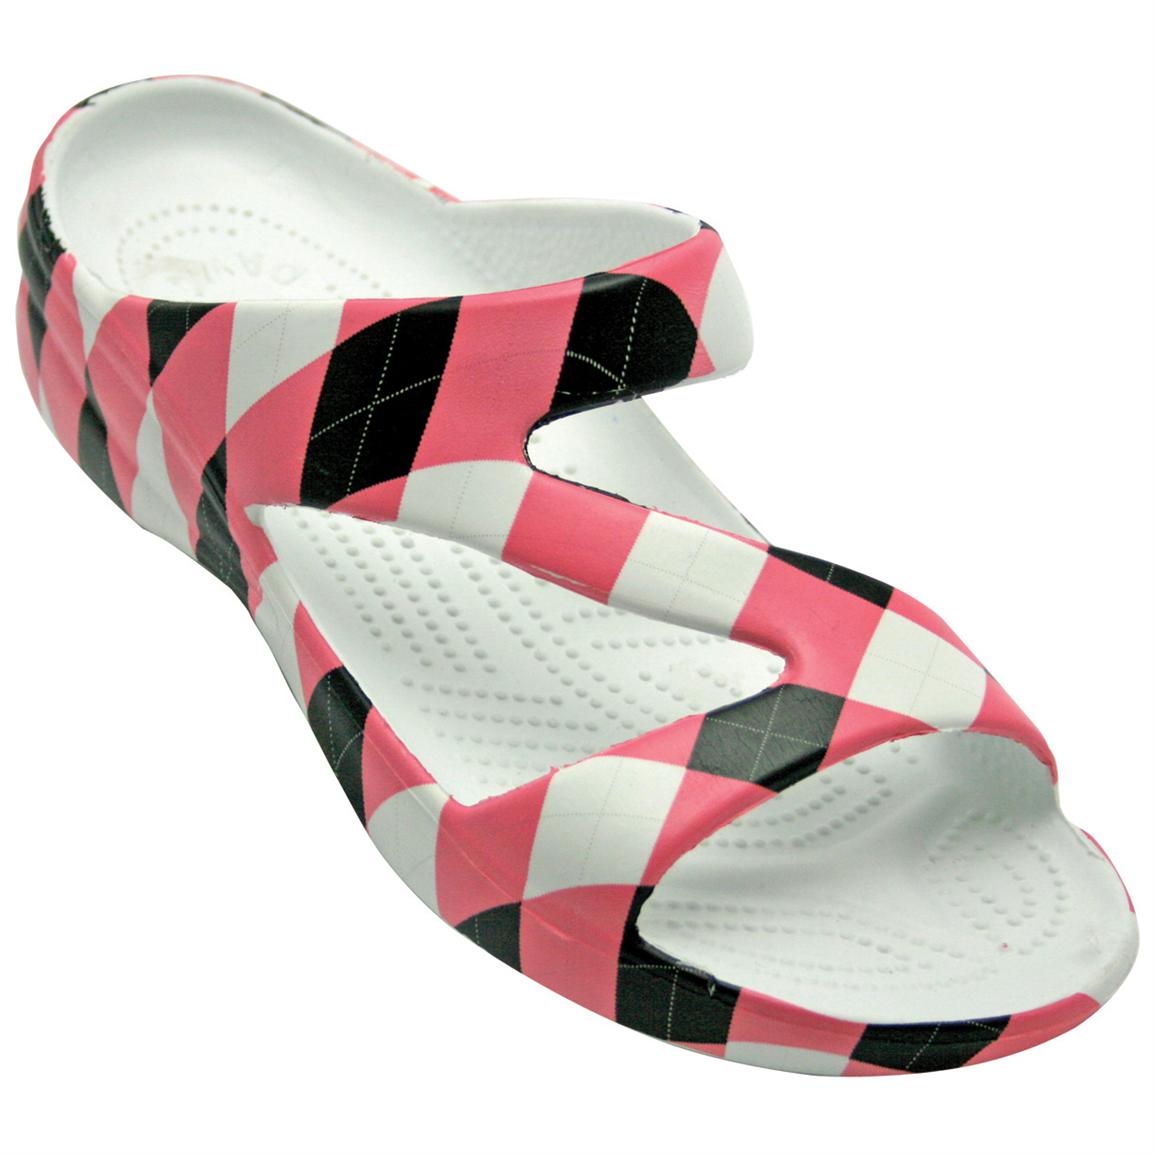 Women's Dawgs® LoudMouth Z Sandals - 583664, Sandals & Flip Flops at Sportsman's Guide1154 x 1154